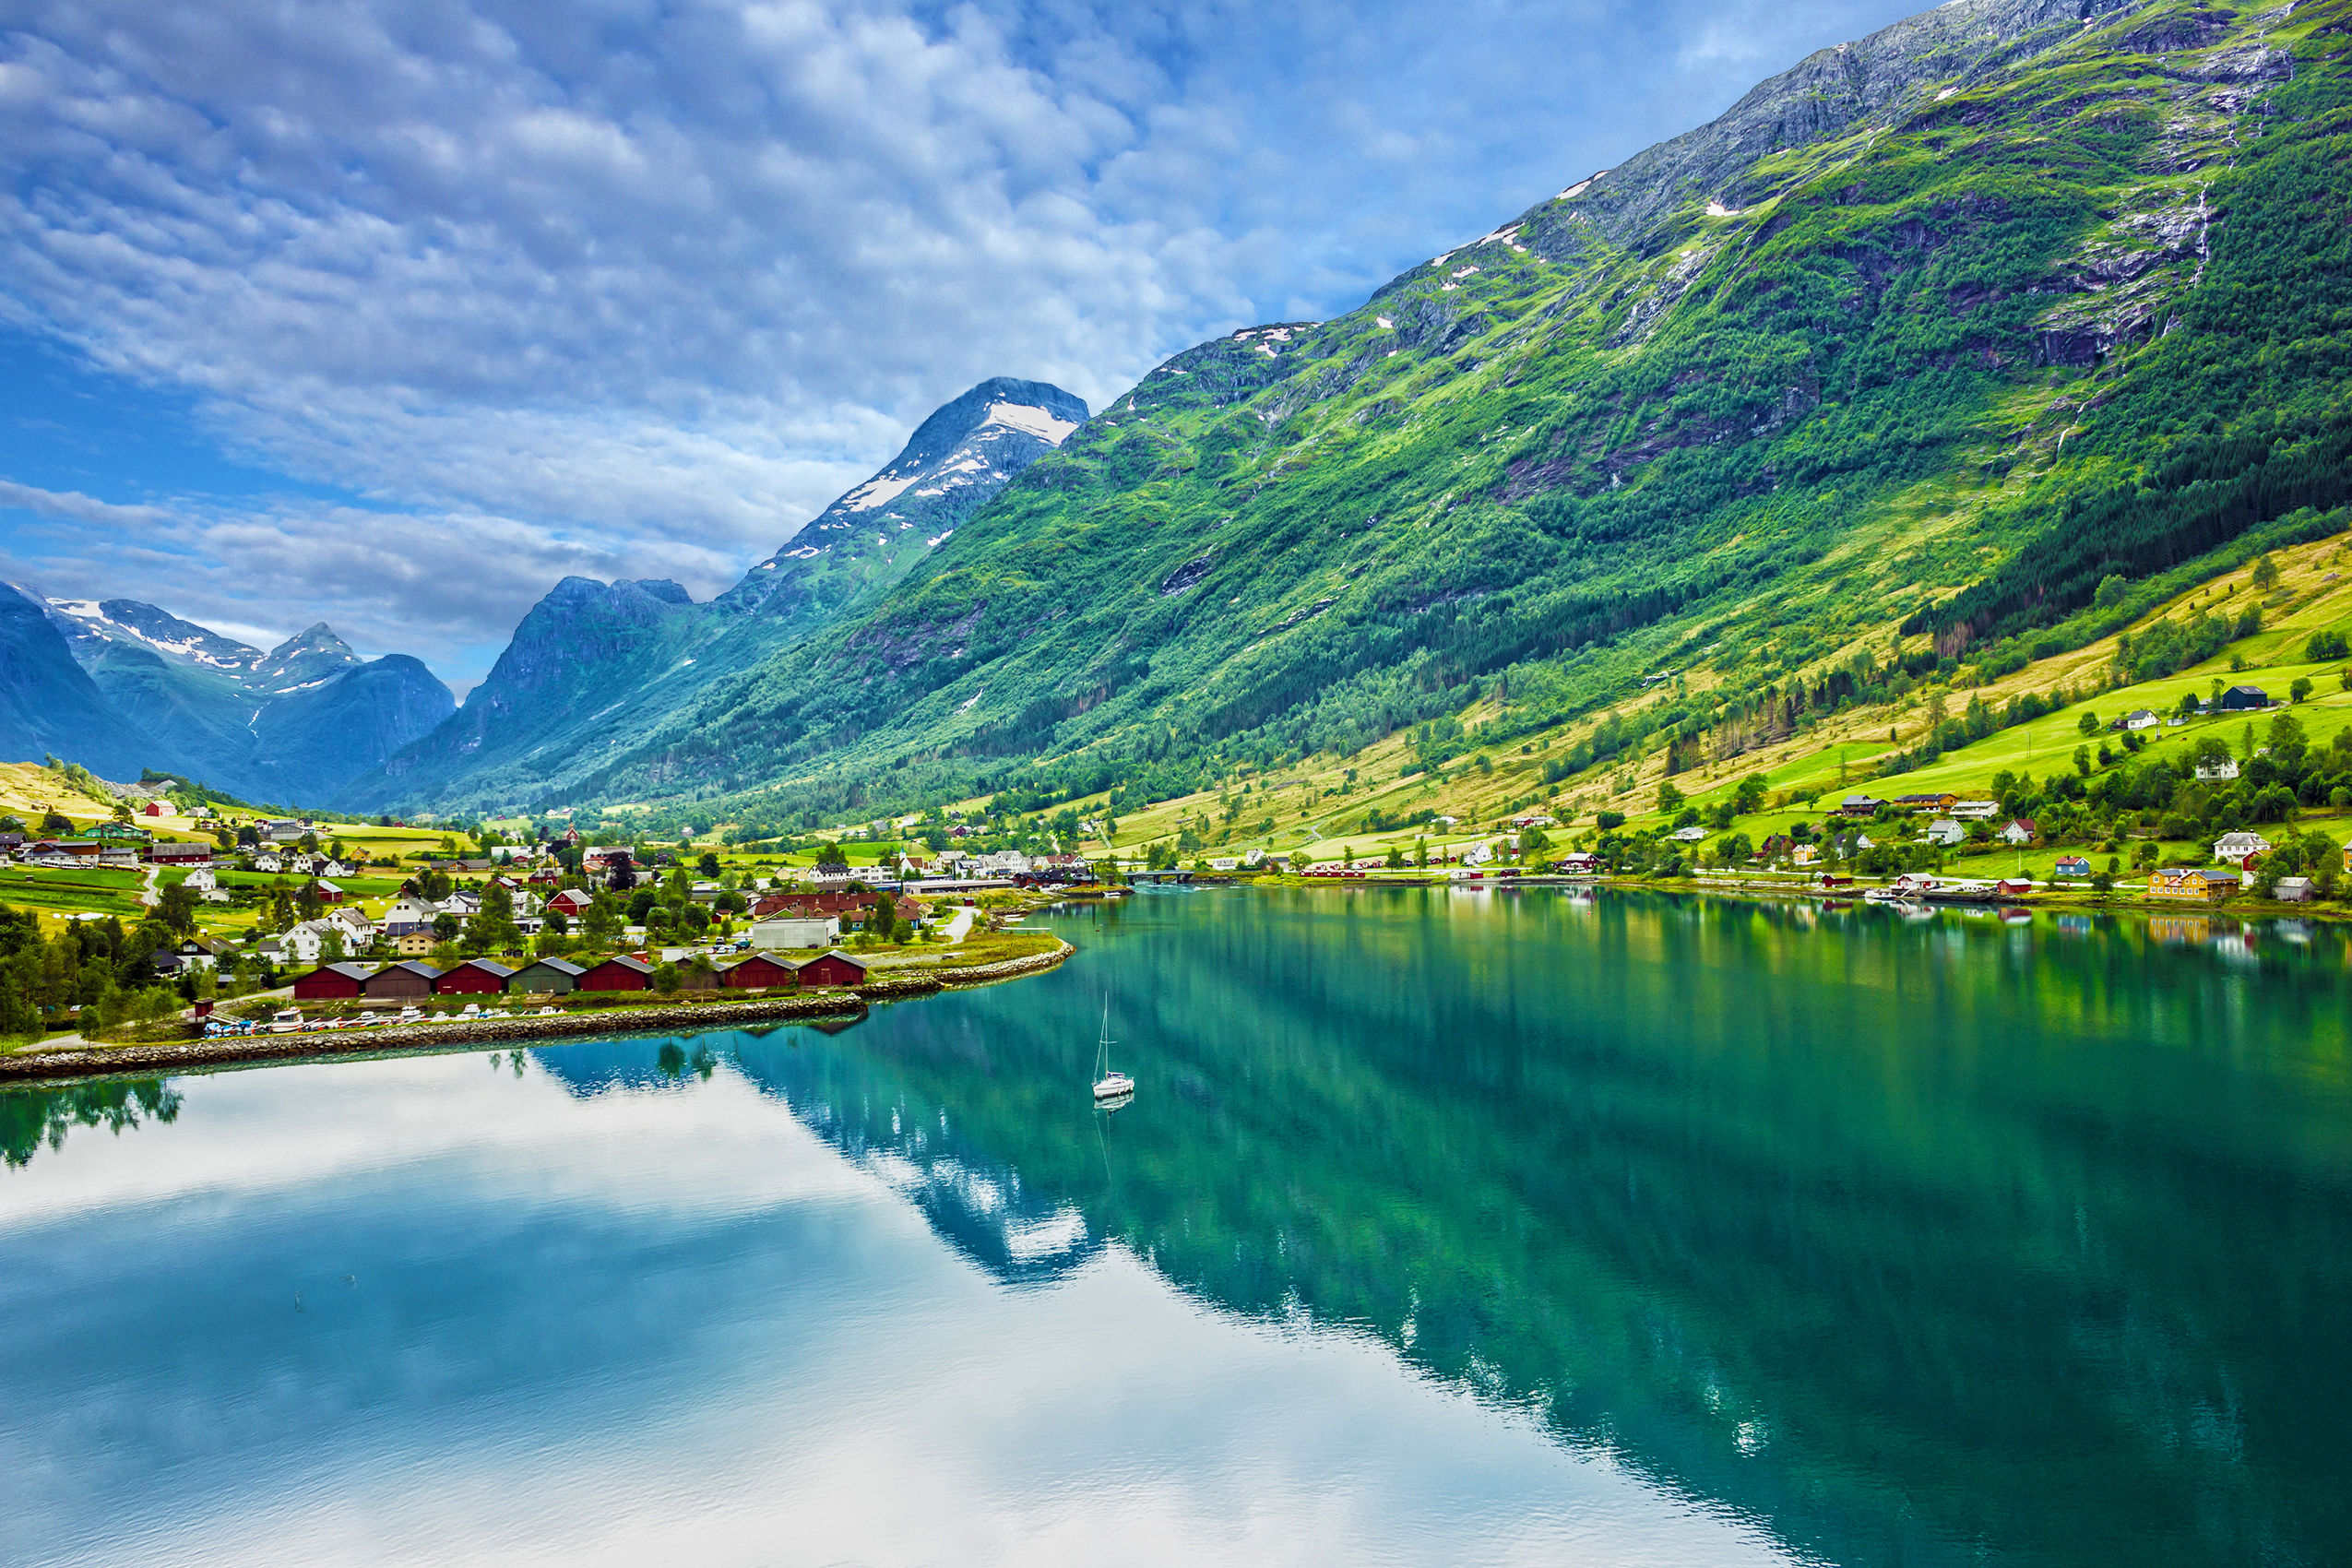 Cruise Noorwegen en Noordkaap incl. busreis